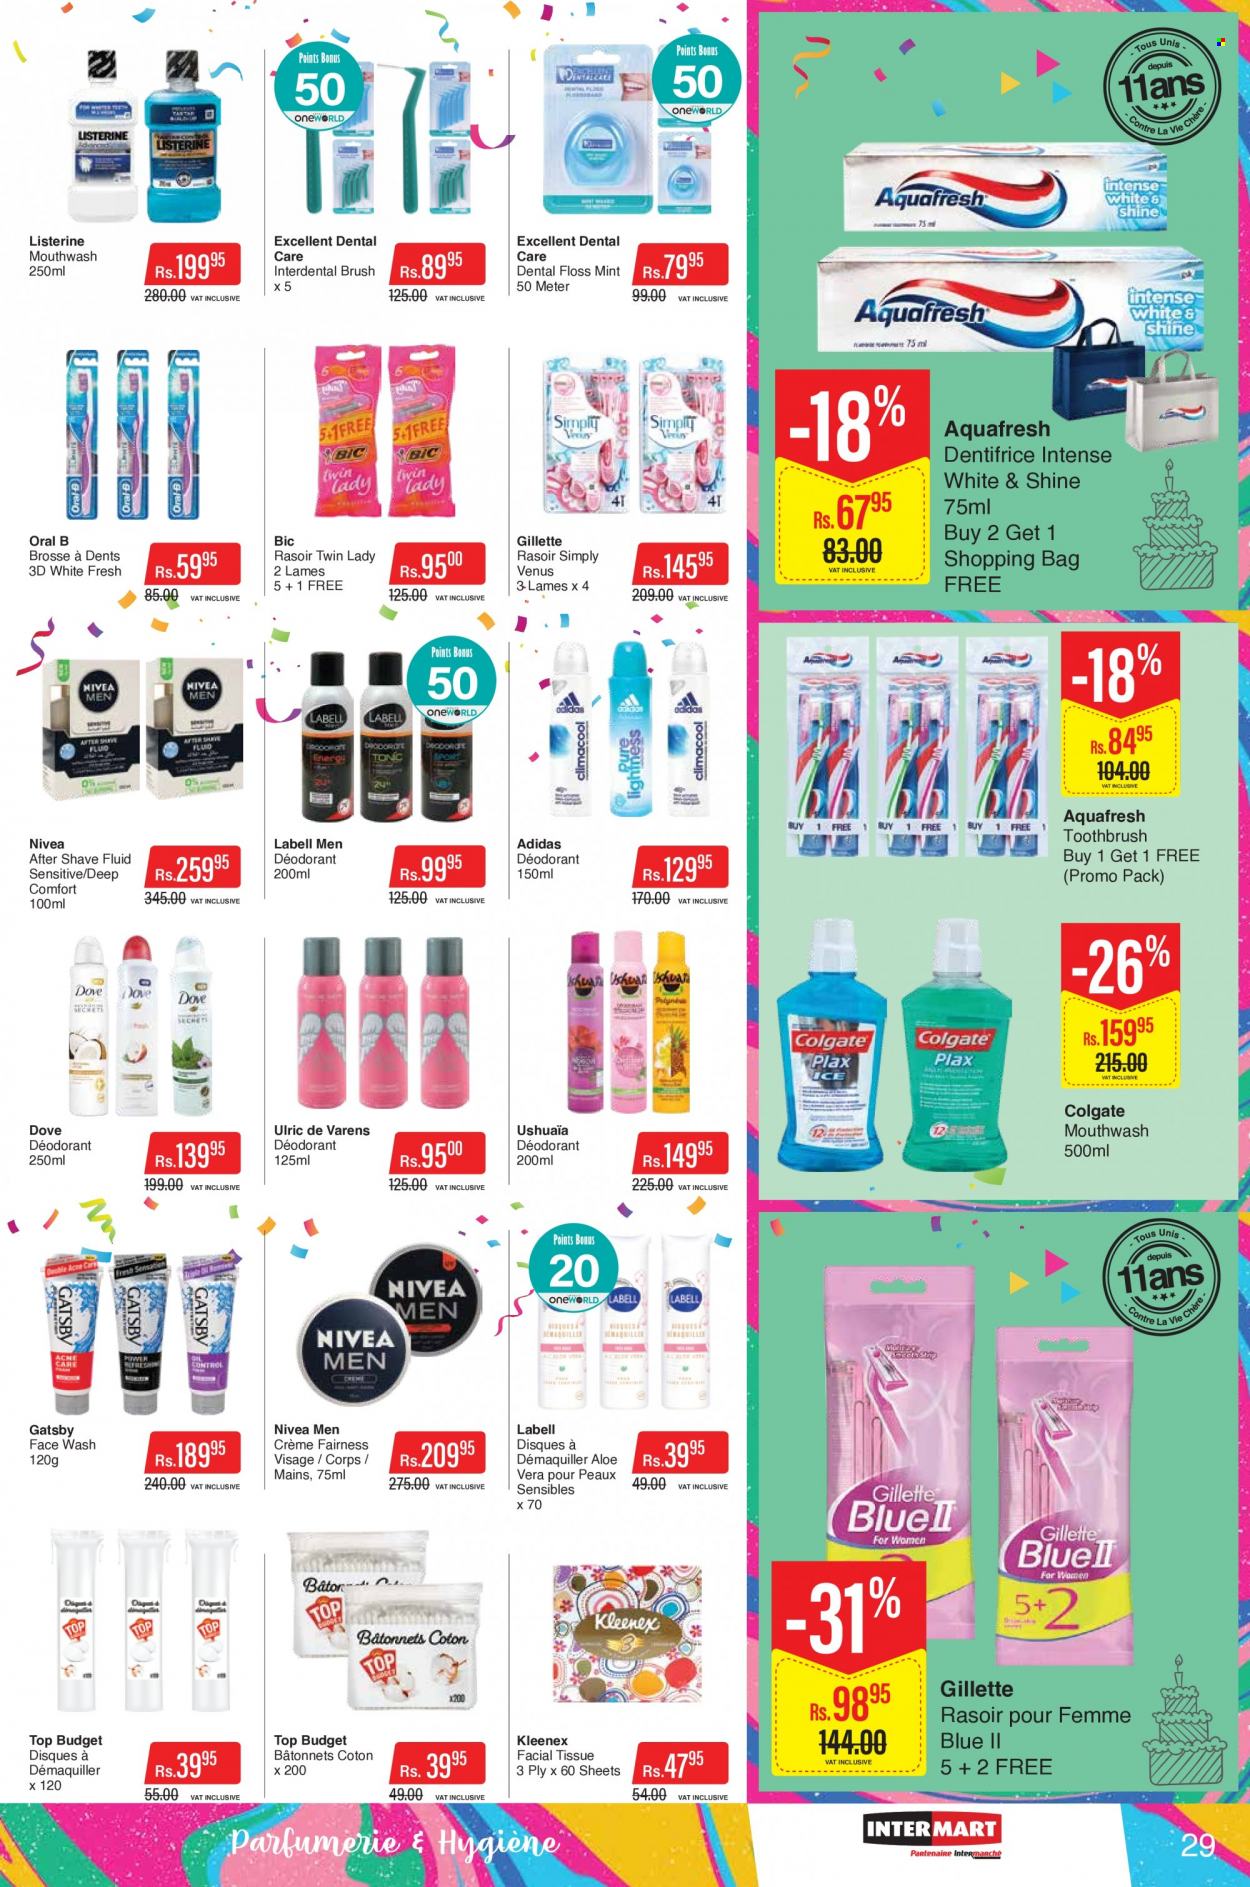 <magasin> - <du DD/MM/YYYY au DD/MM/YYYY> - Produits soldés - ,<products from flyers>. Page 29. 